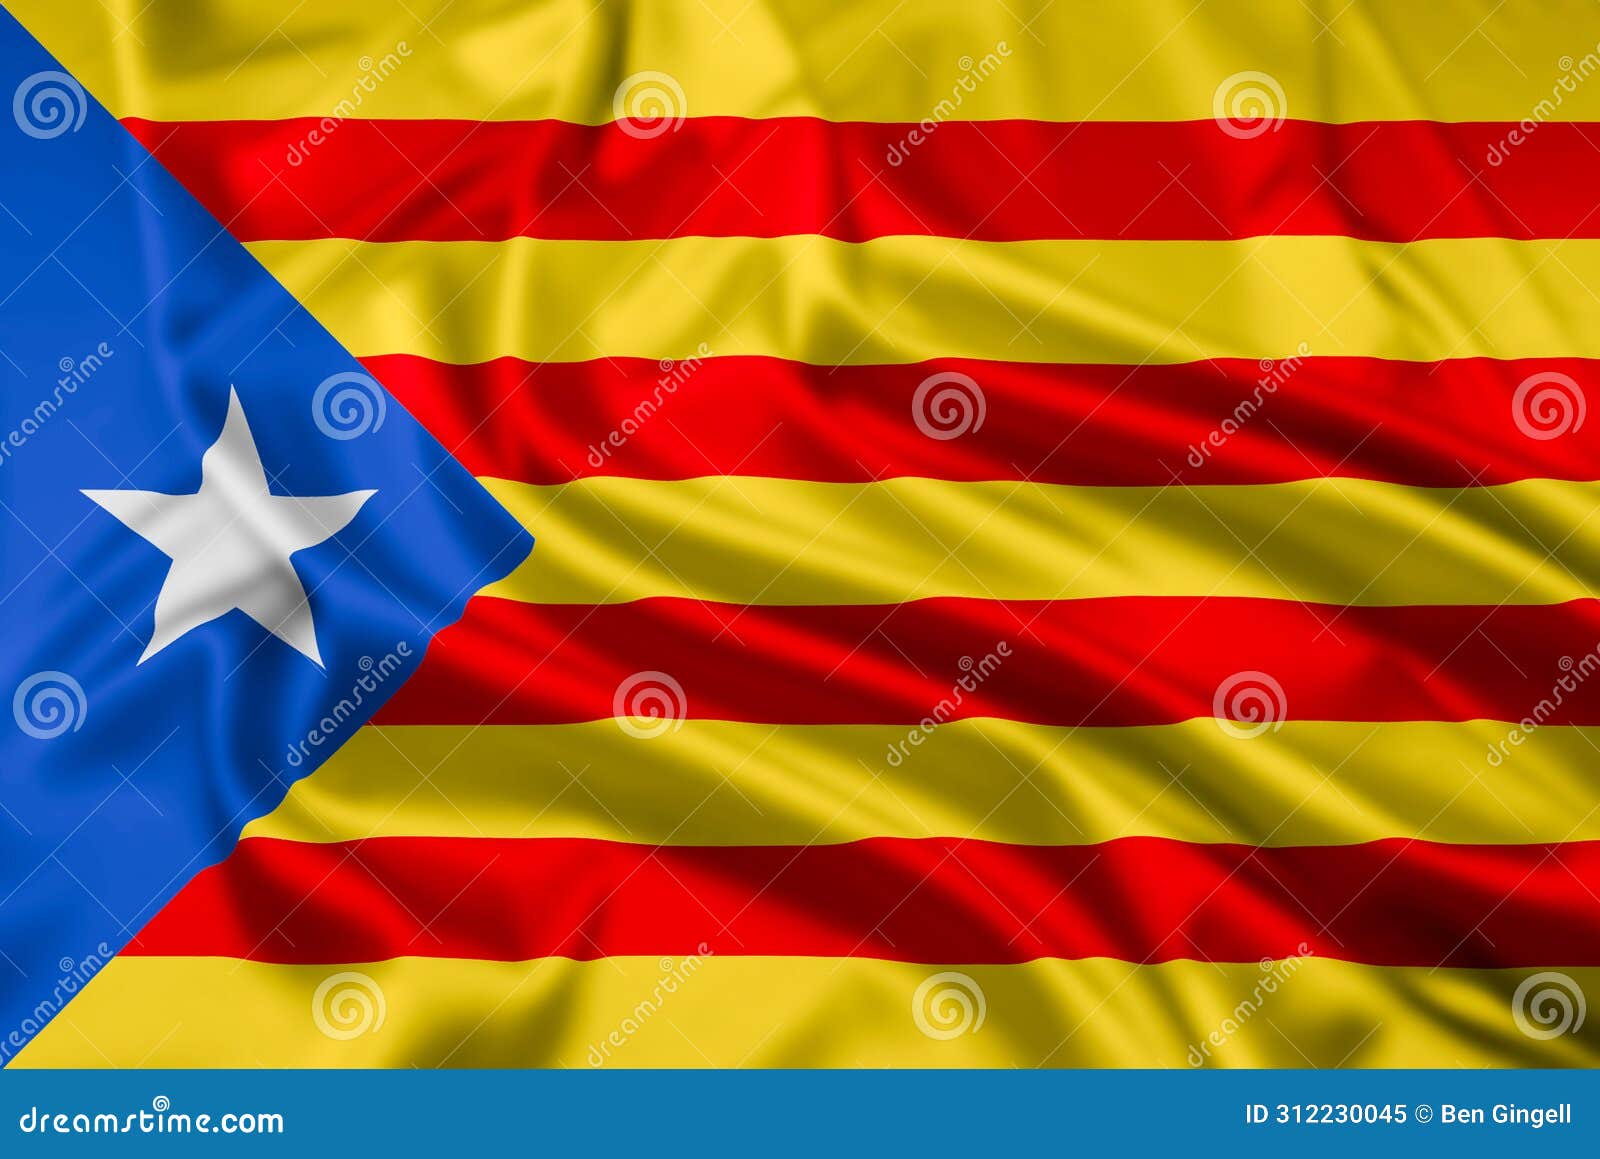 the flag estelada of catalonia rippled